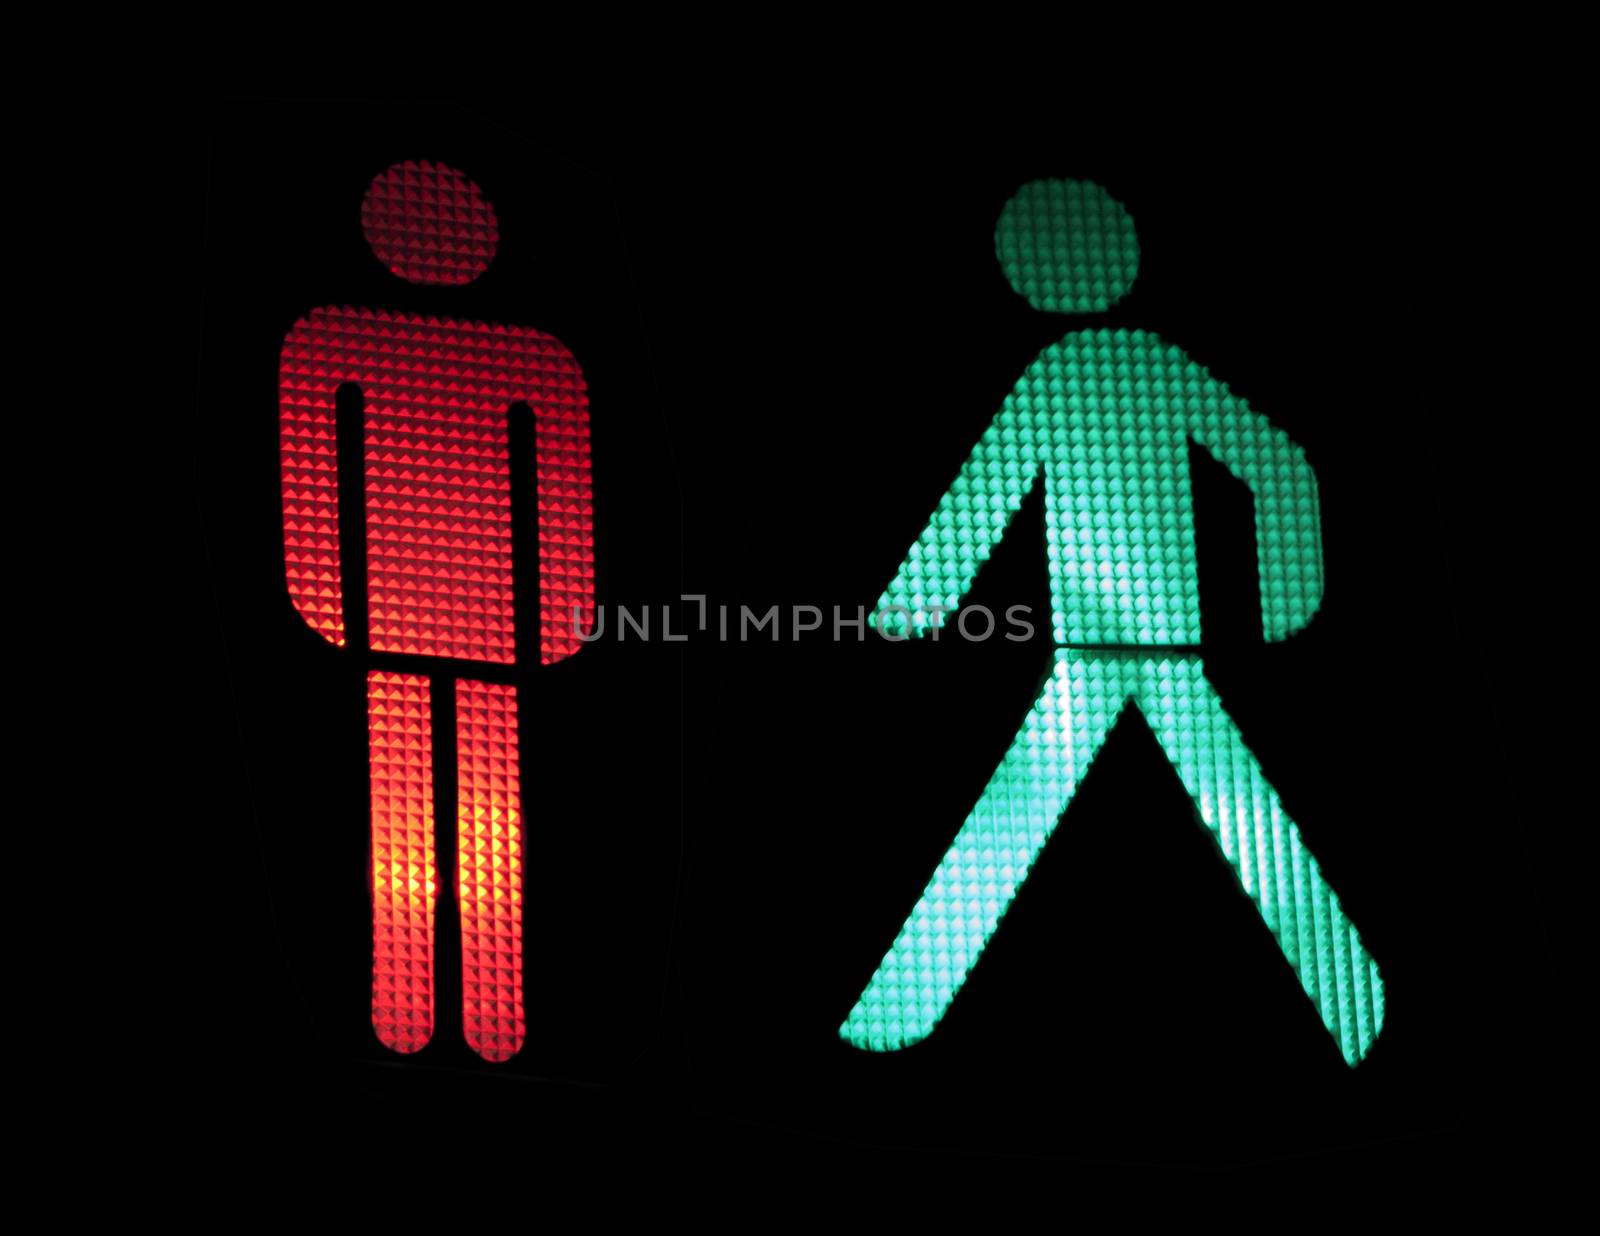 Traffic light of pedestrians by deyan_georgiev